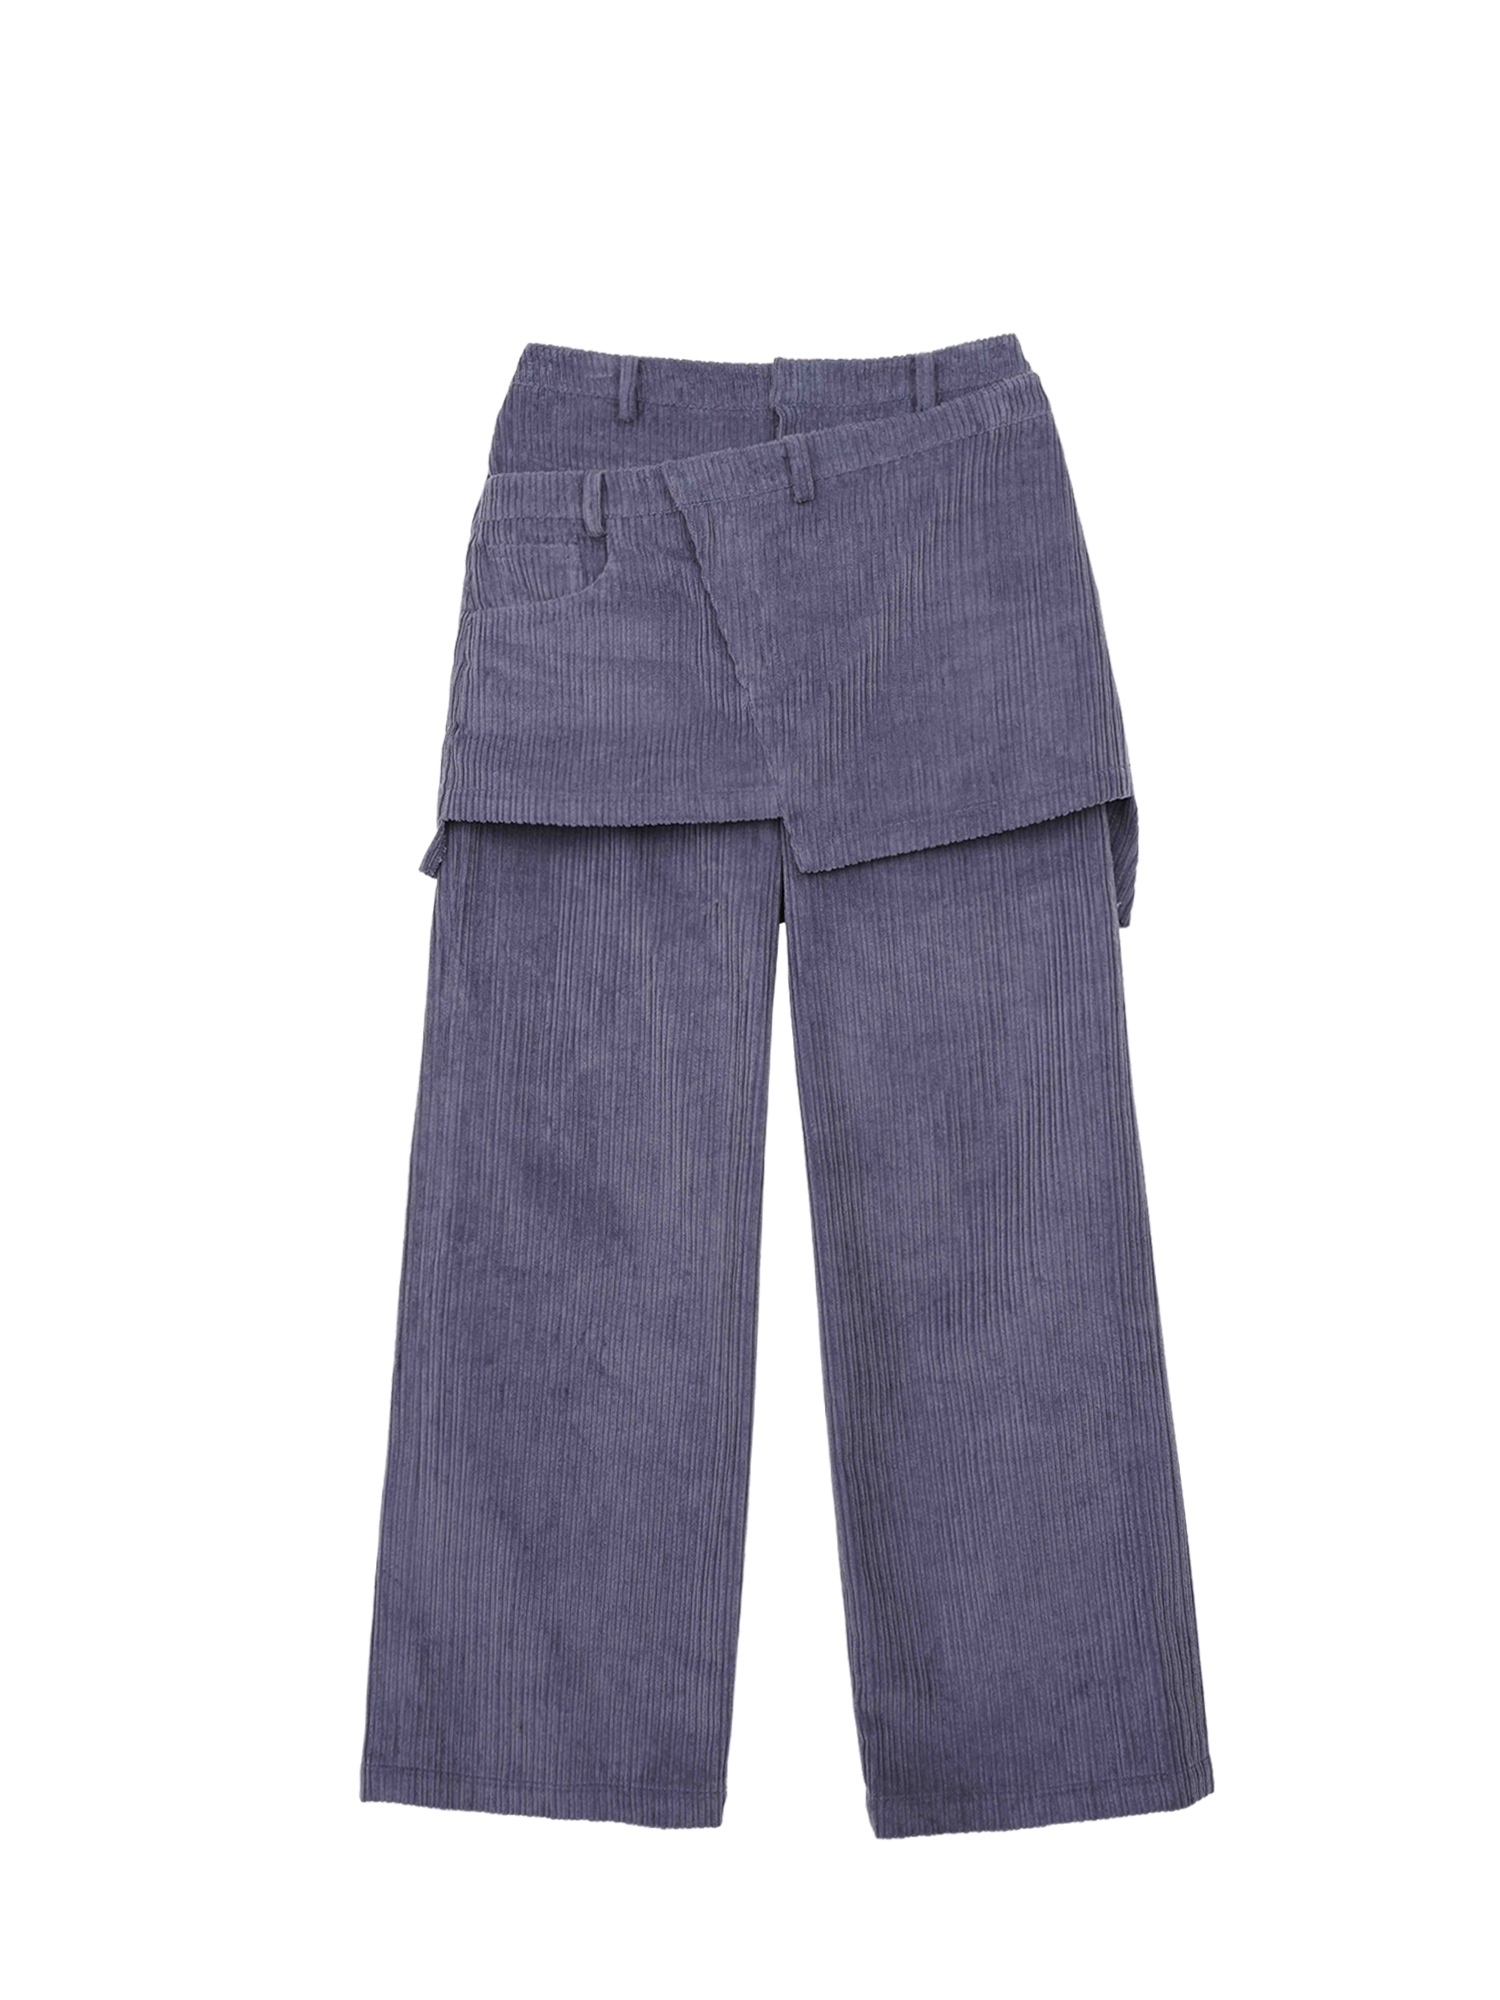 Double Layered Corduroy Pants - Iris Blue